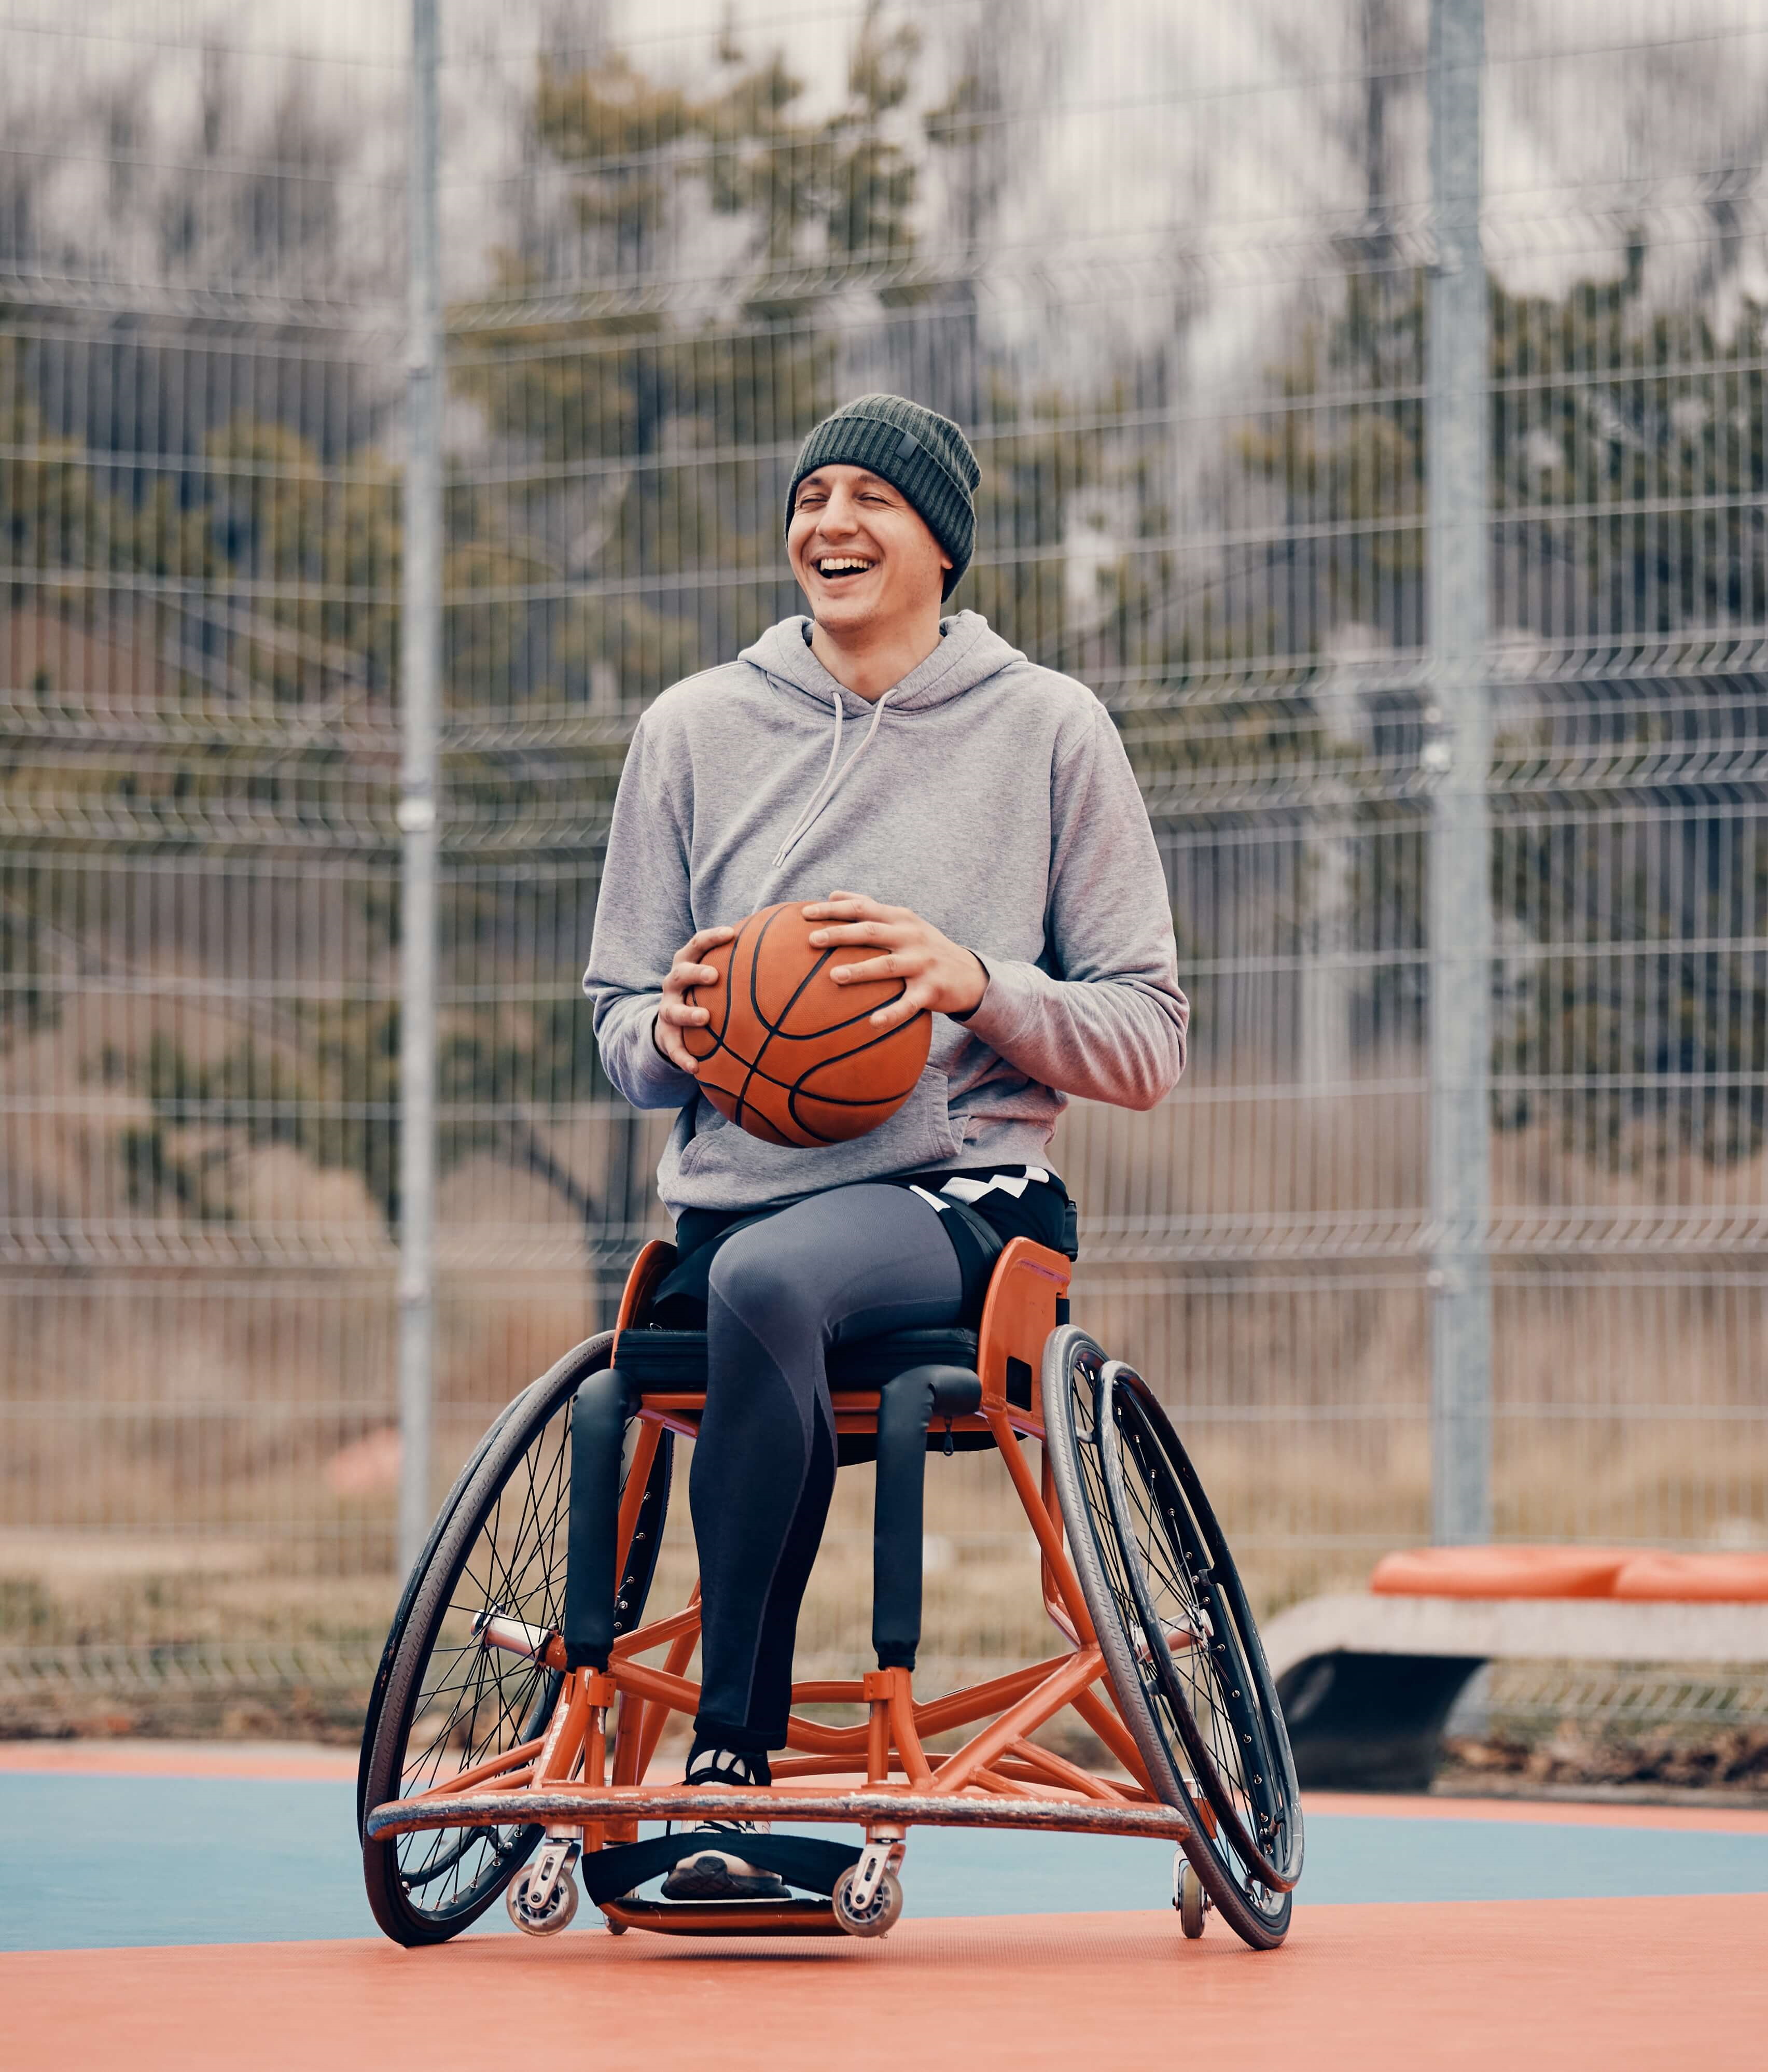 Wheelchair user holding a basketball